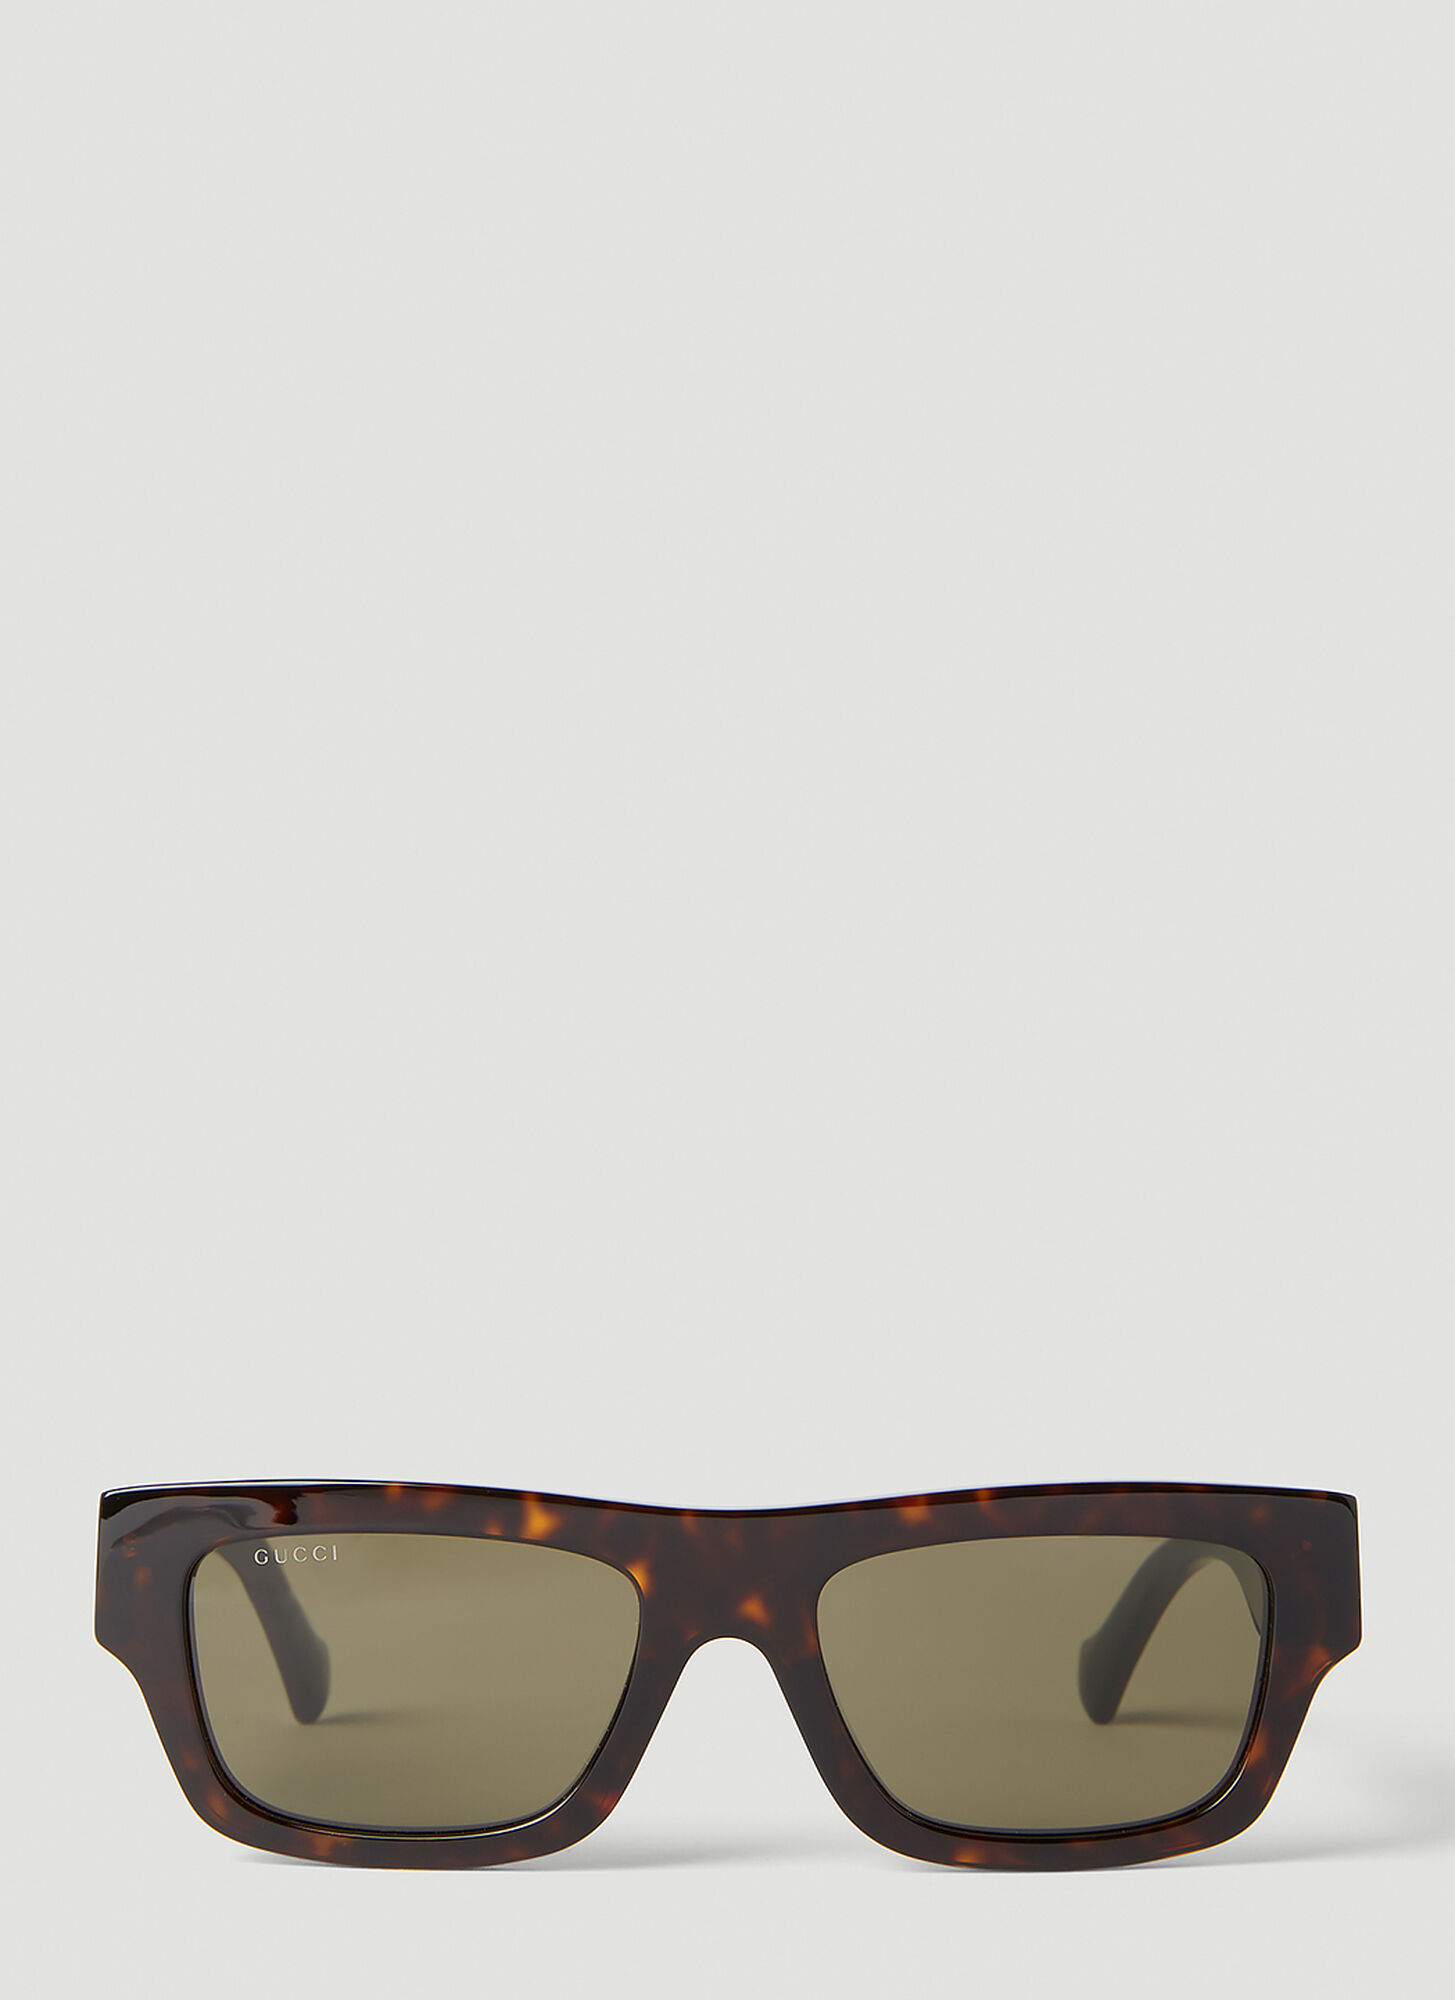 Gucci Rectangular Sunglasses In Brown